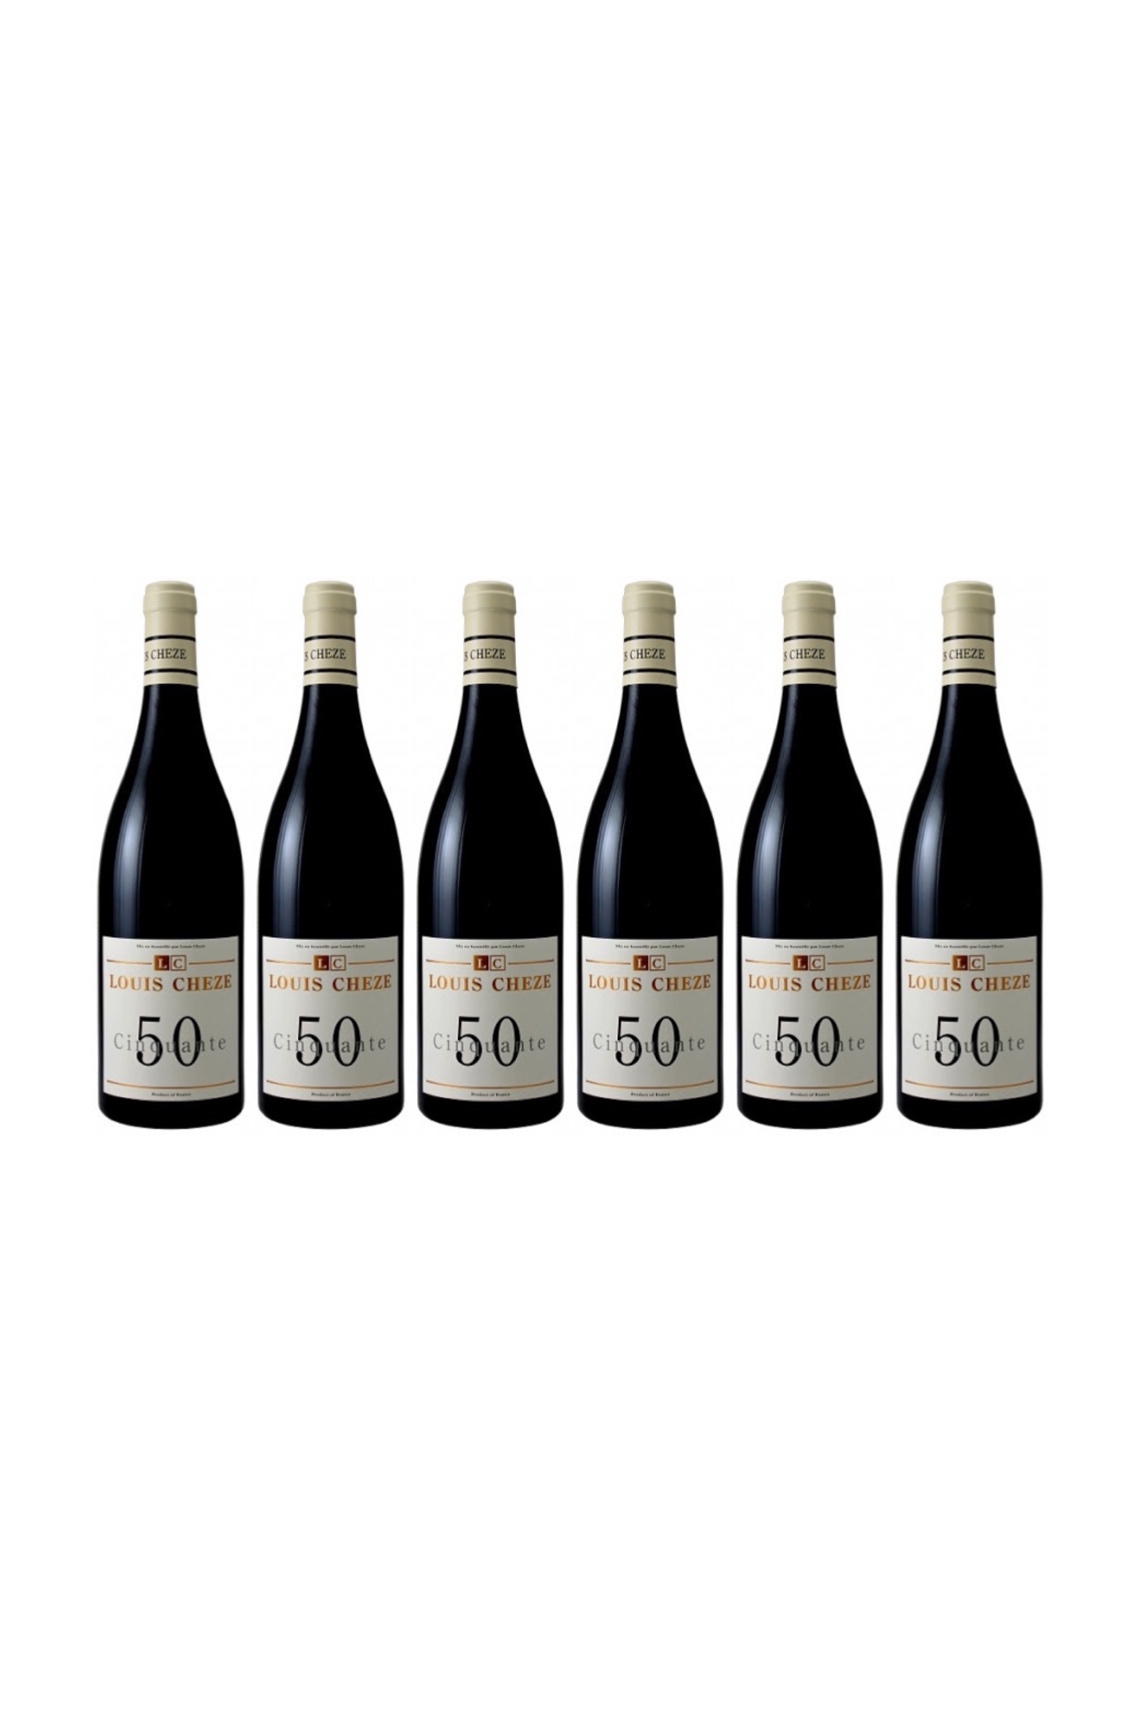 1 Case of Cuvée 50/Cinquante, Collines Rhodaniennes, Domaine Louis Chèze 2016 (6 bottles) with 3 FREE Bottles of KWIRK BELGIUM Craft Beer worth $13.50!